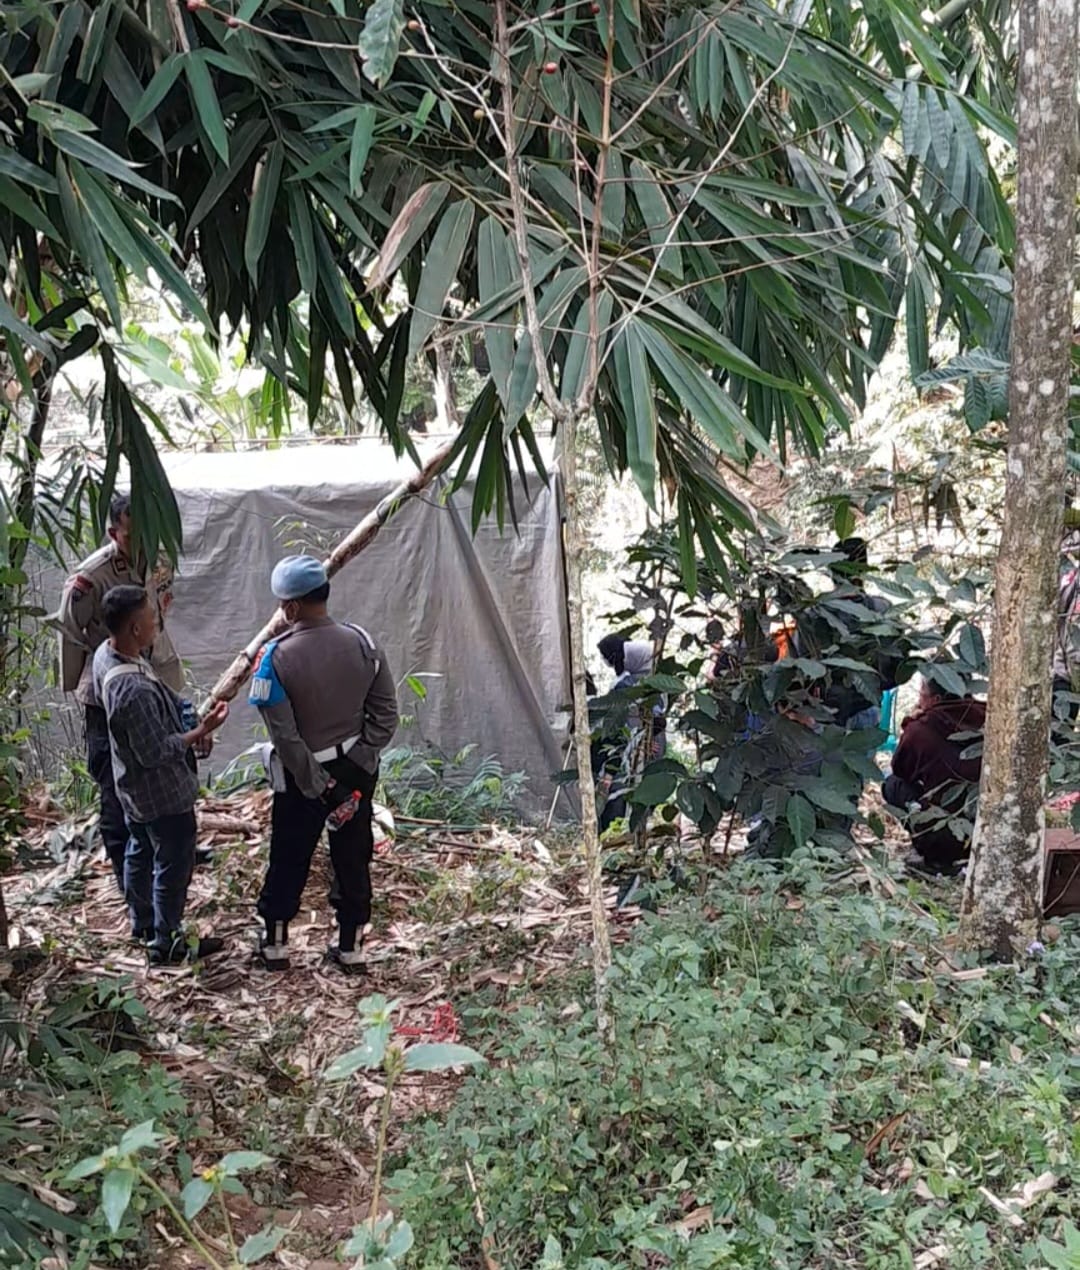 Geger! Suami Diduga Bunuh Istri di Pacet Bandung, Polisi Bongkar Makam Korban Guna Penyelidikan